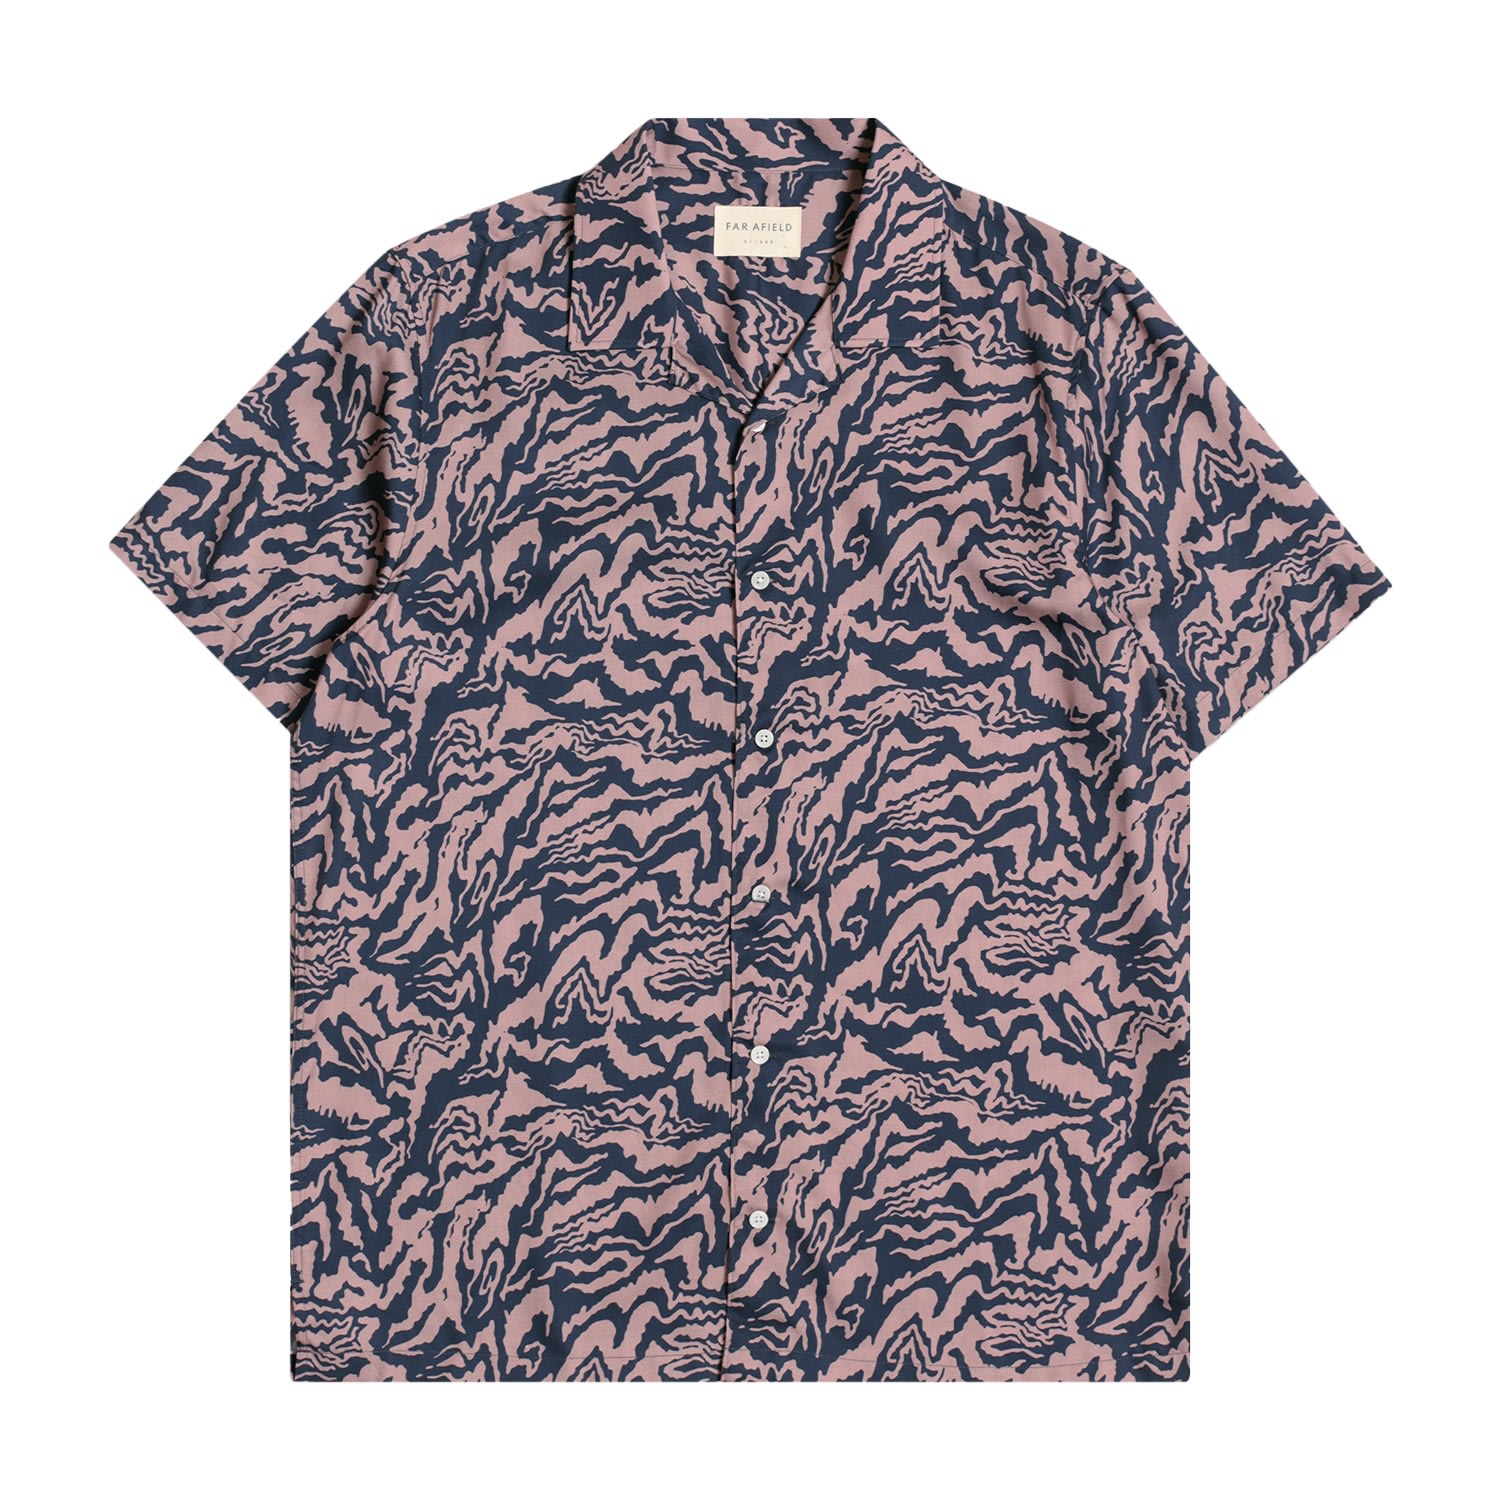 Men's Stachio Shirt - Animal Print Small Far Afield